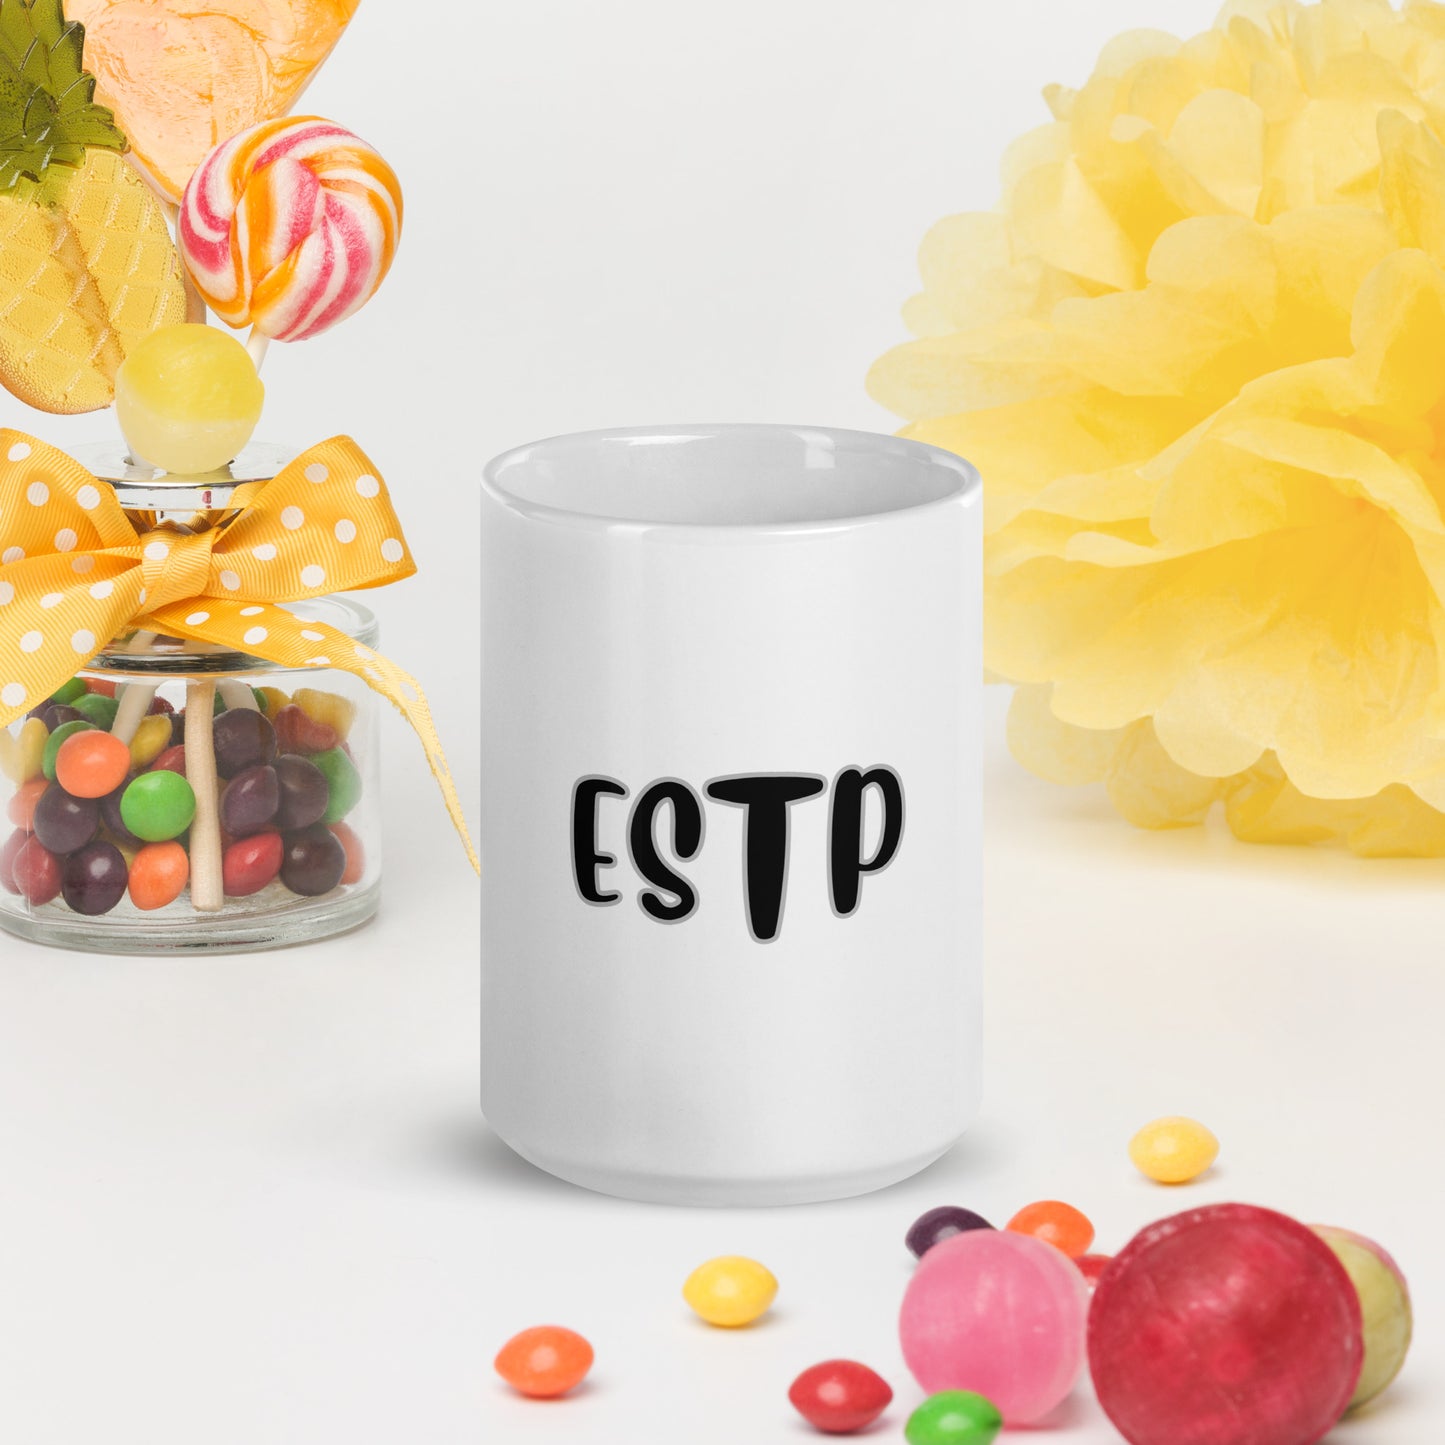 ESTP White glossy mug